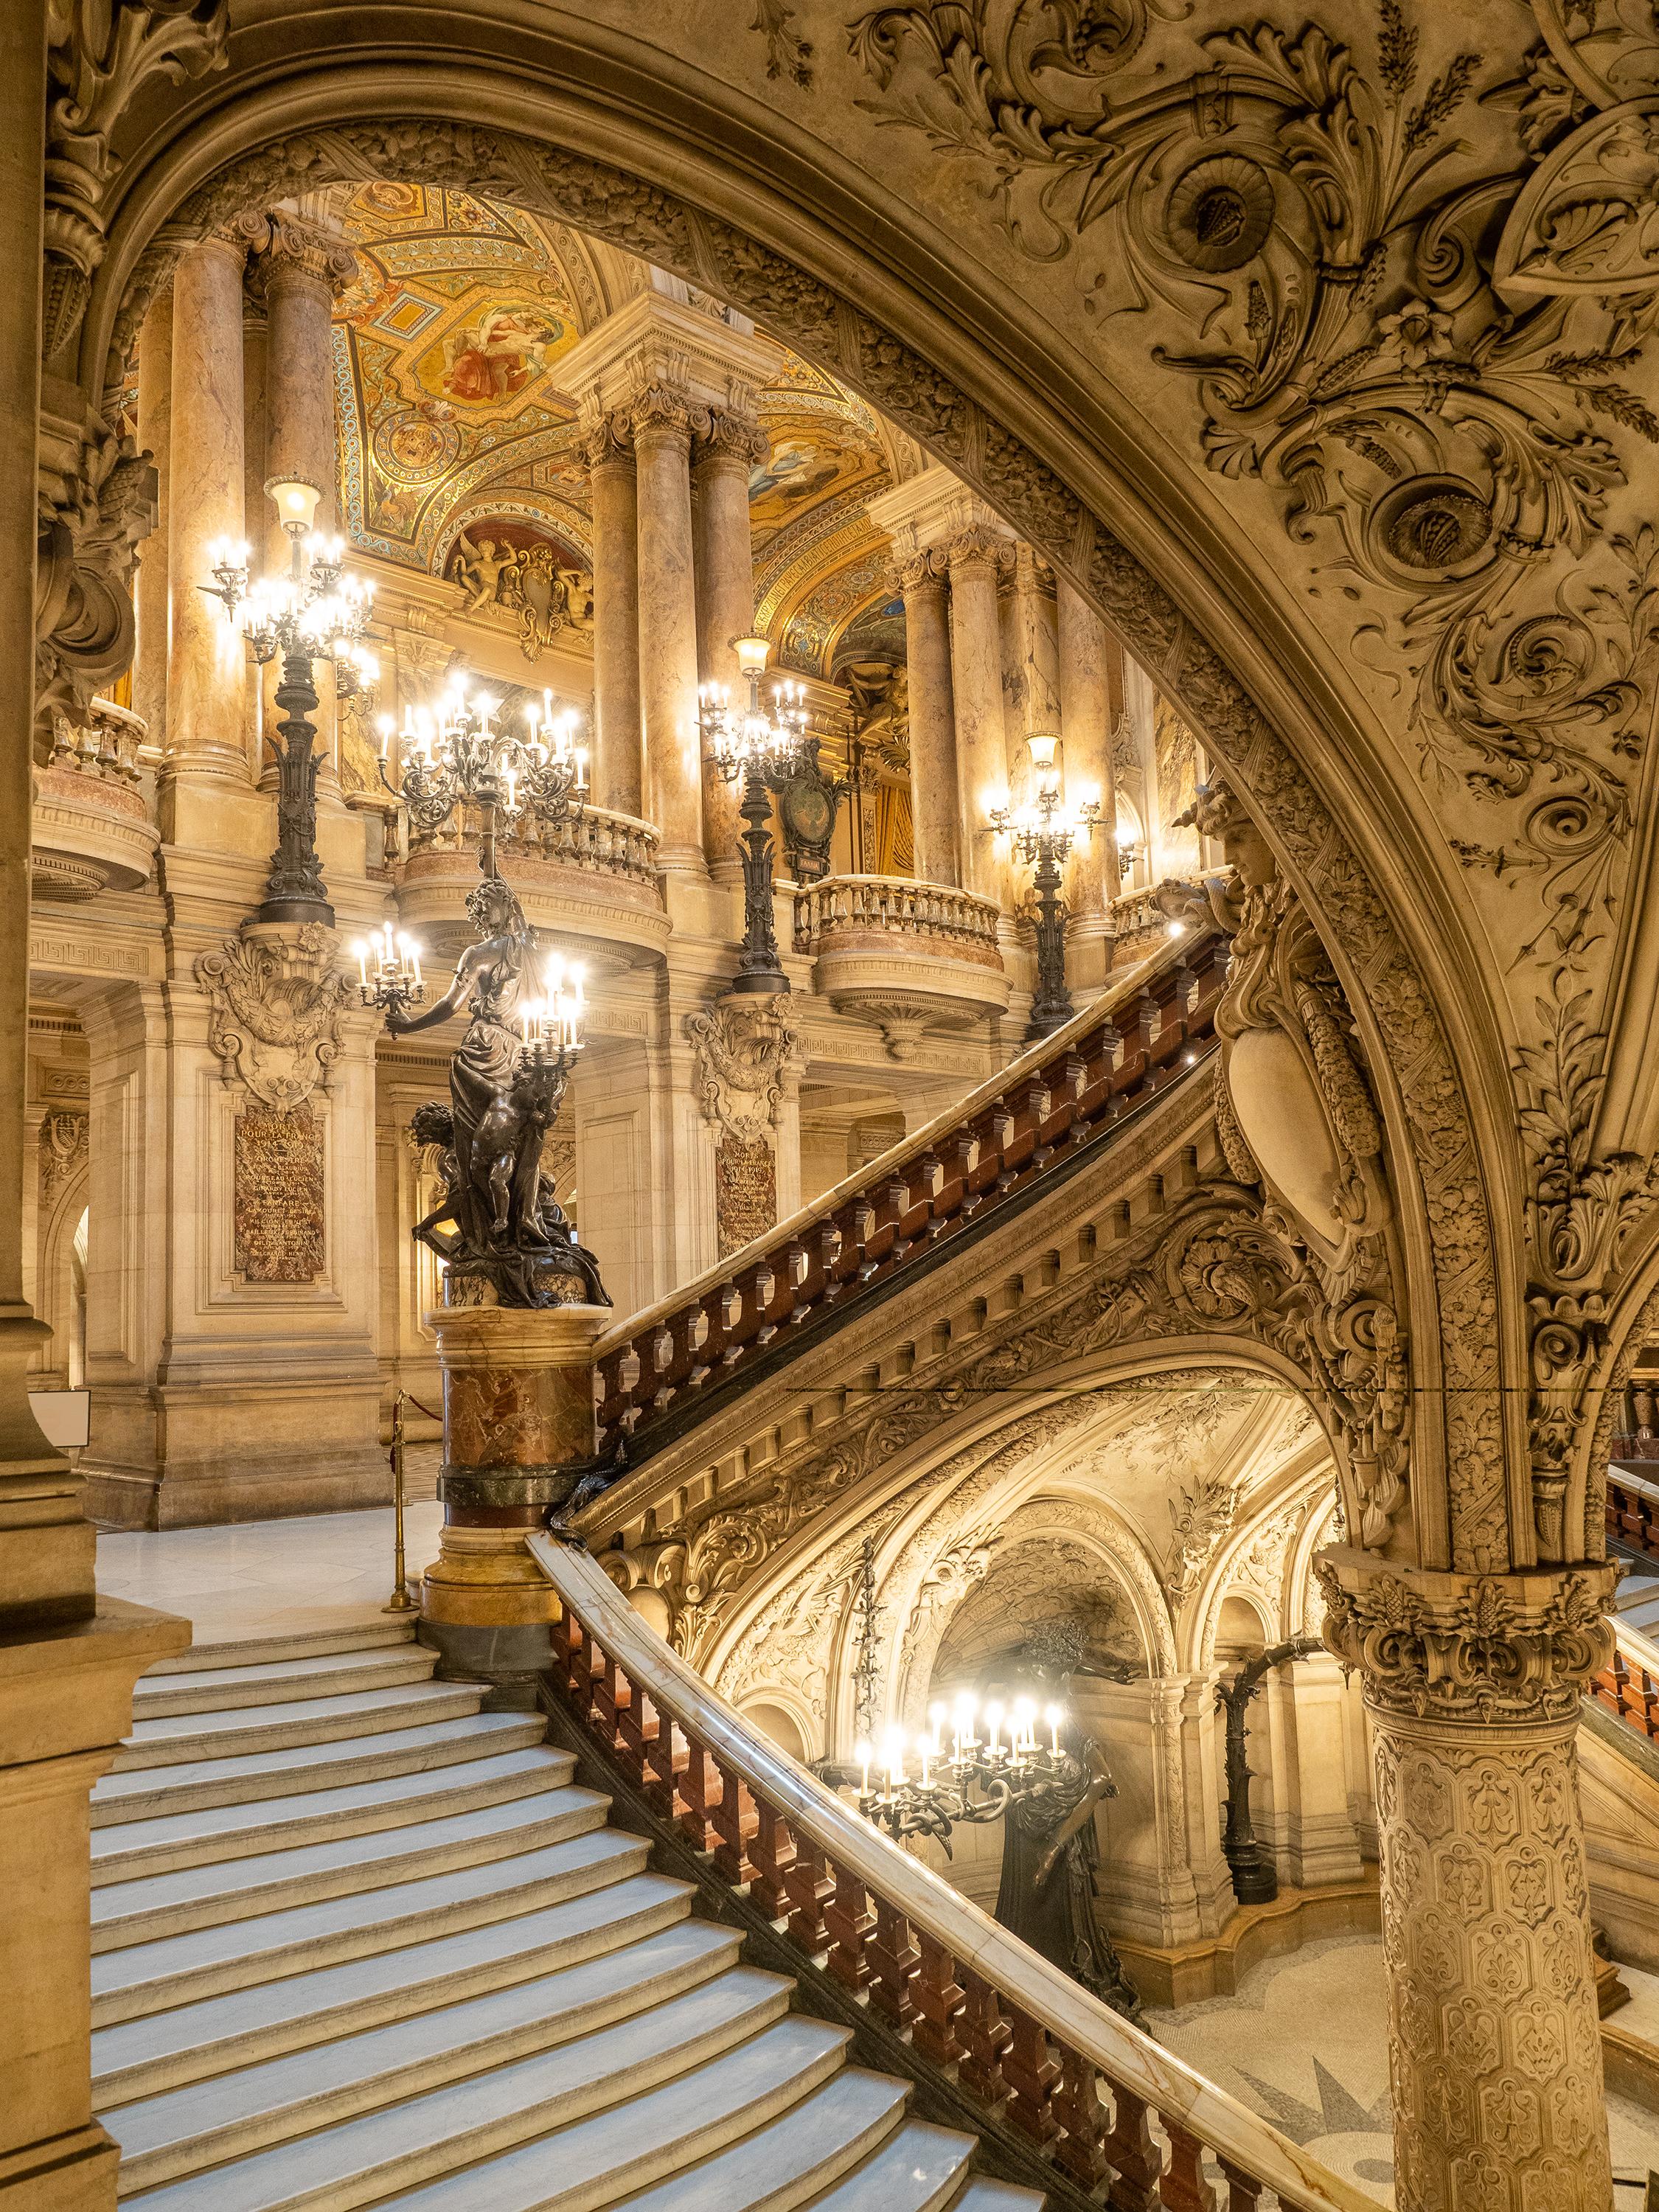 Myrtie Cope Color Photograph - "Opera Garnier Stairwell" - architectural photography - Paris - Ezra Stoller